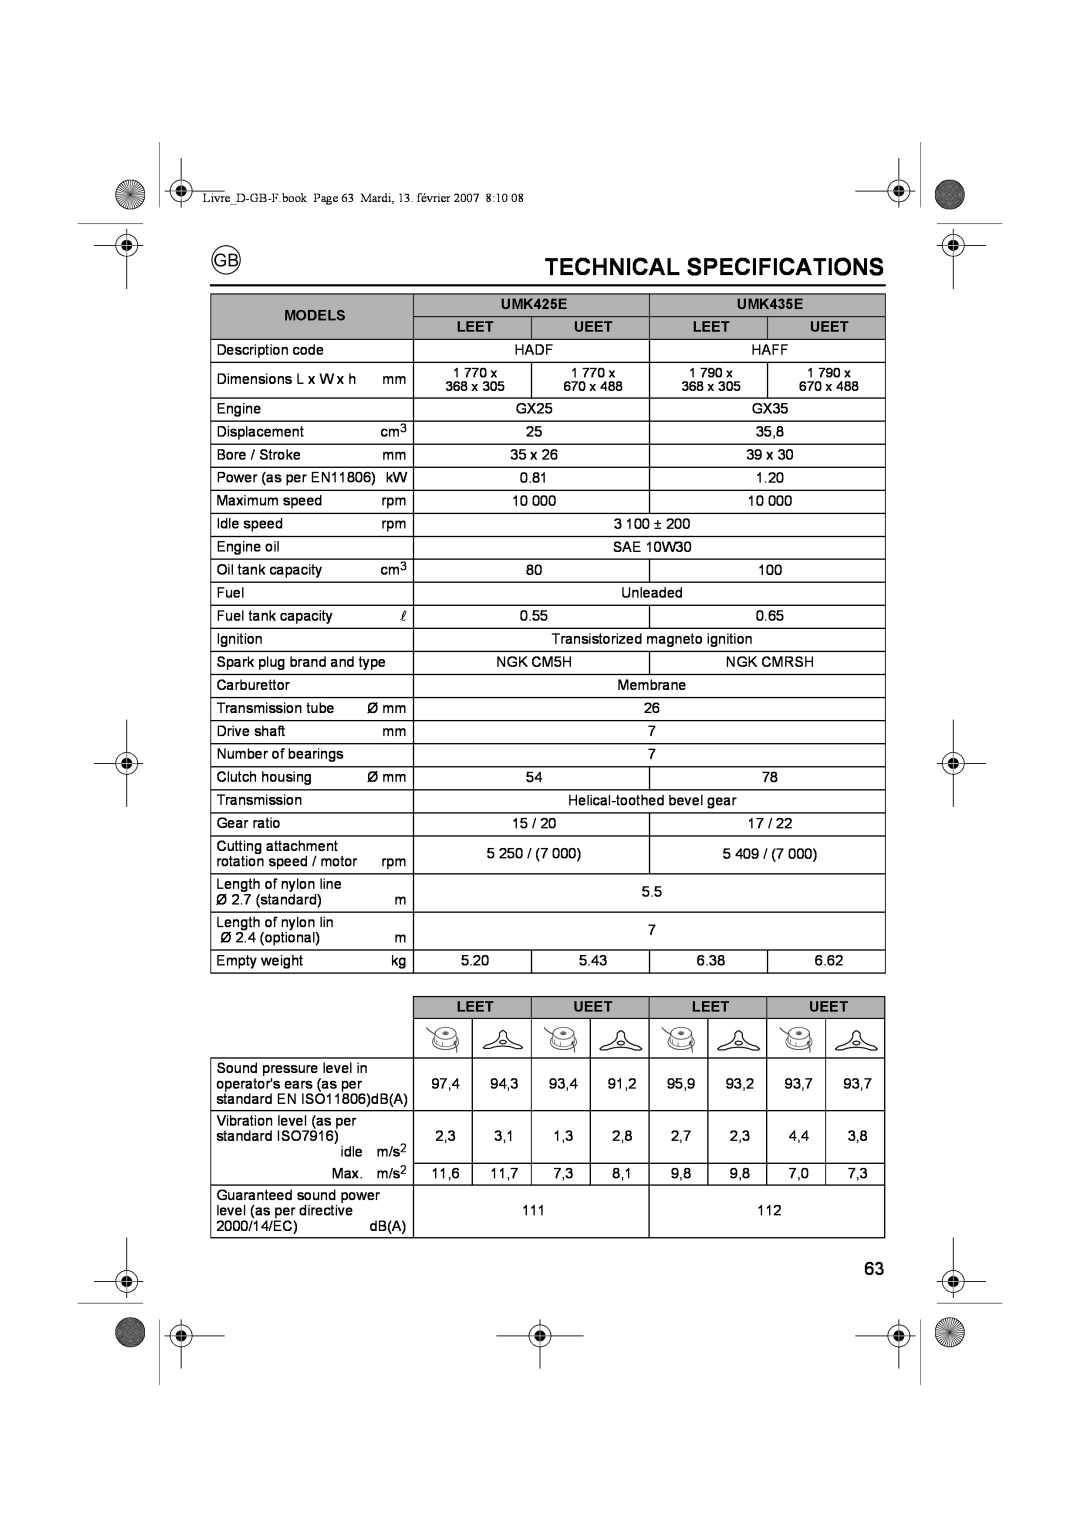 Honda Power Equipment UMK435E owner manual Technical Specifications, Models, UMK425E, Leet, Ueet 